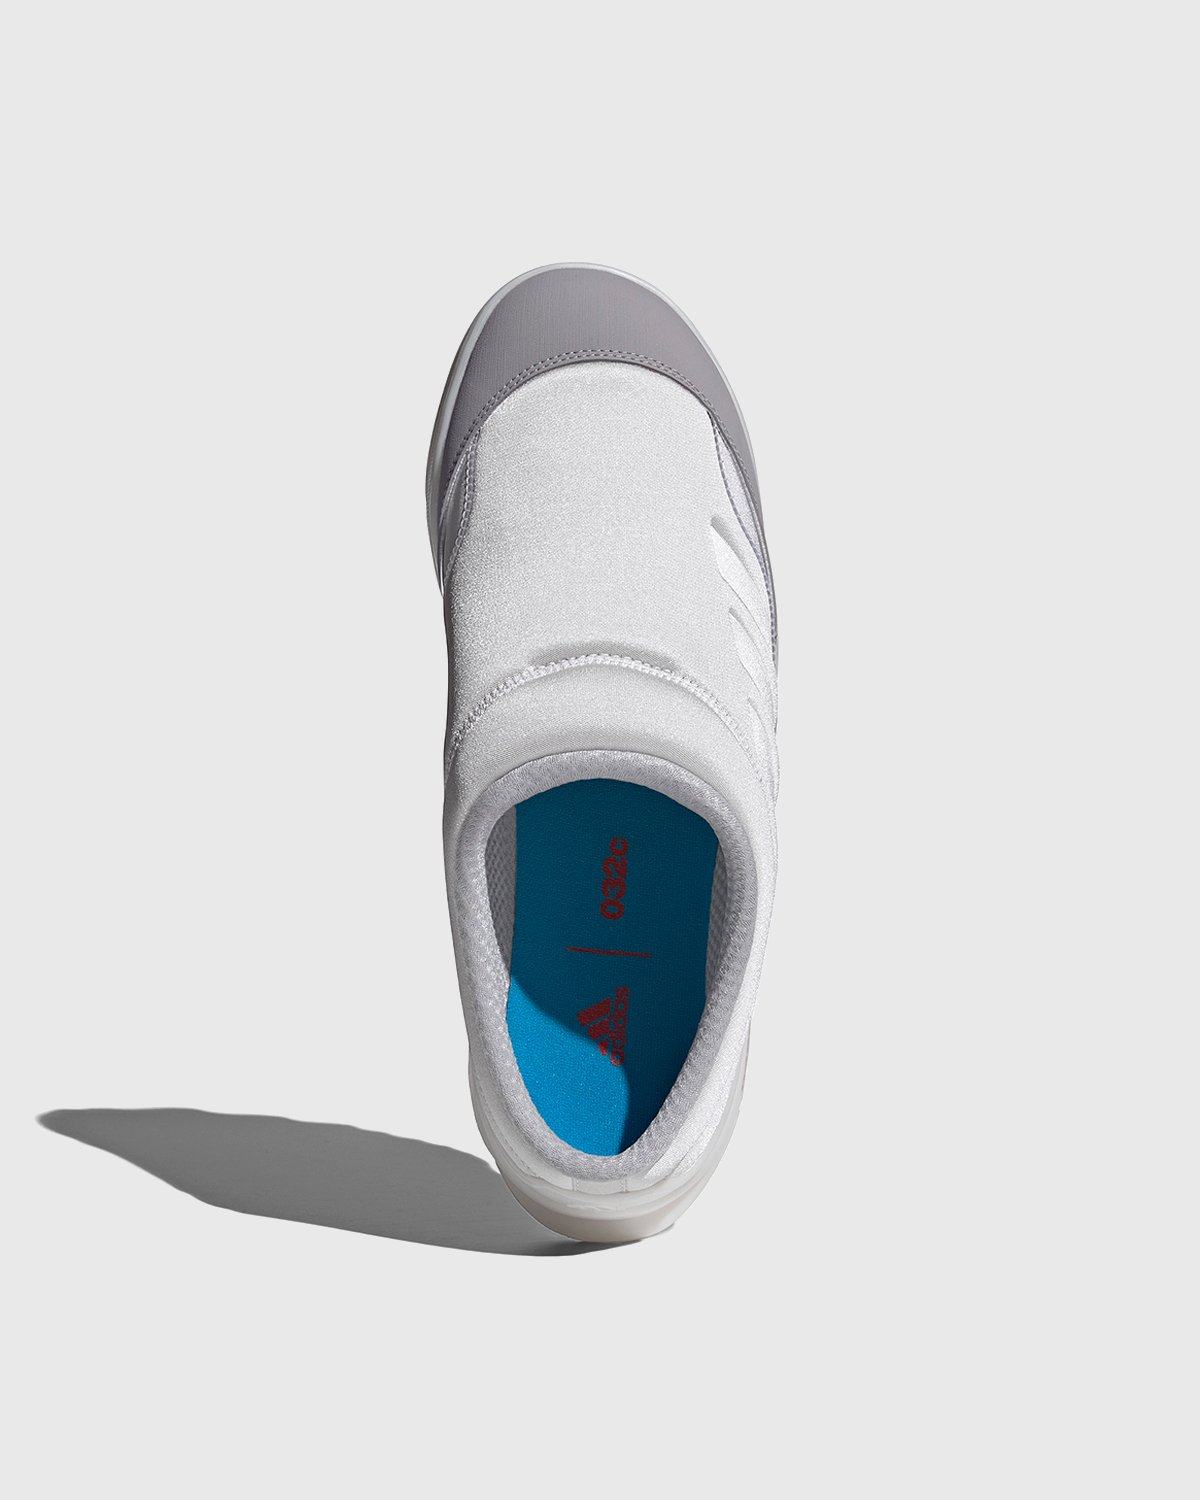 Adidas x 032c - GSG Mule Greone - Footwear - White - Image 4